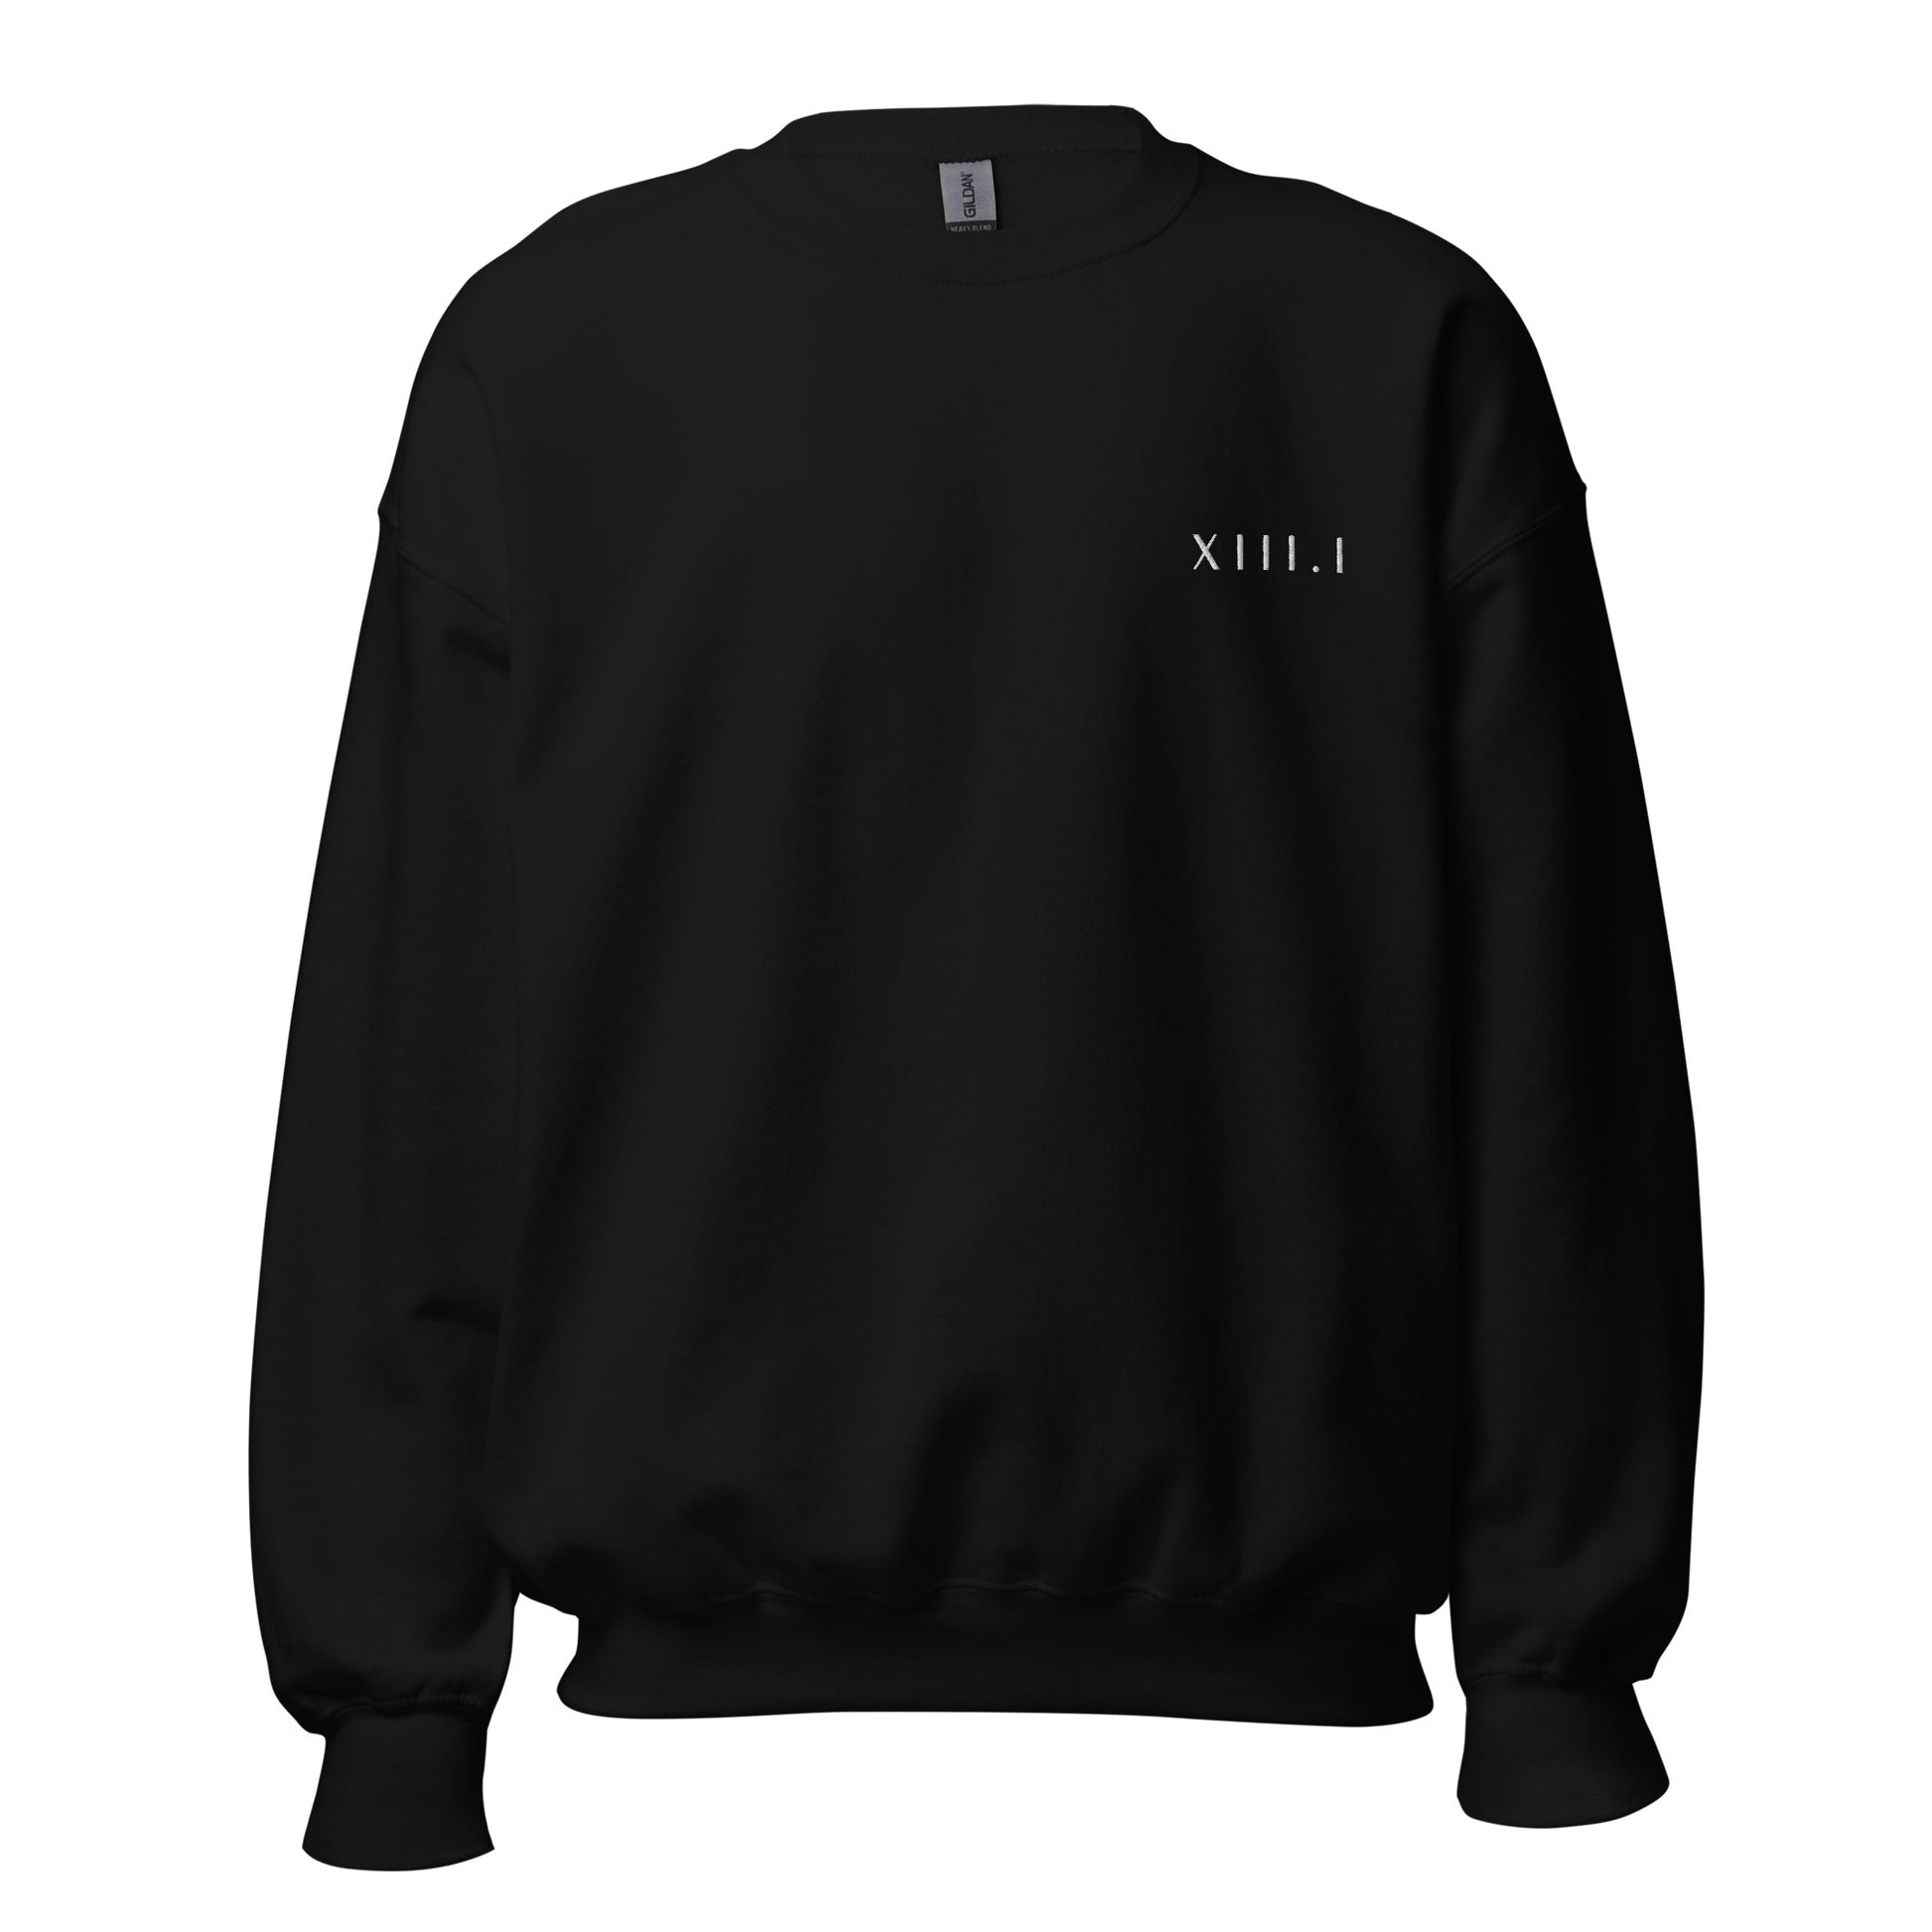 black unisex sweatshirt with XIII.I 13.1 half marathon in roman numerals embroidered in white writing